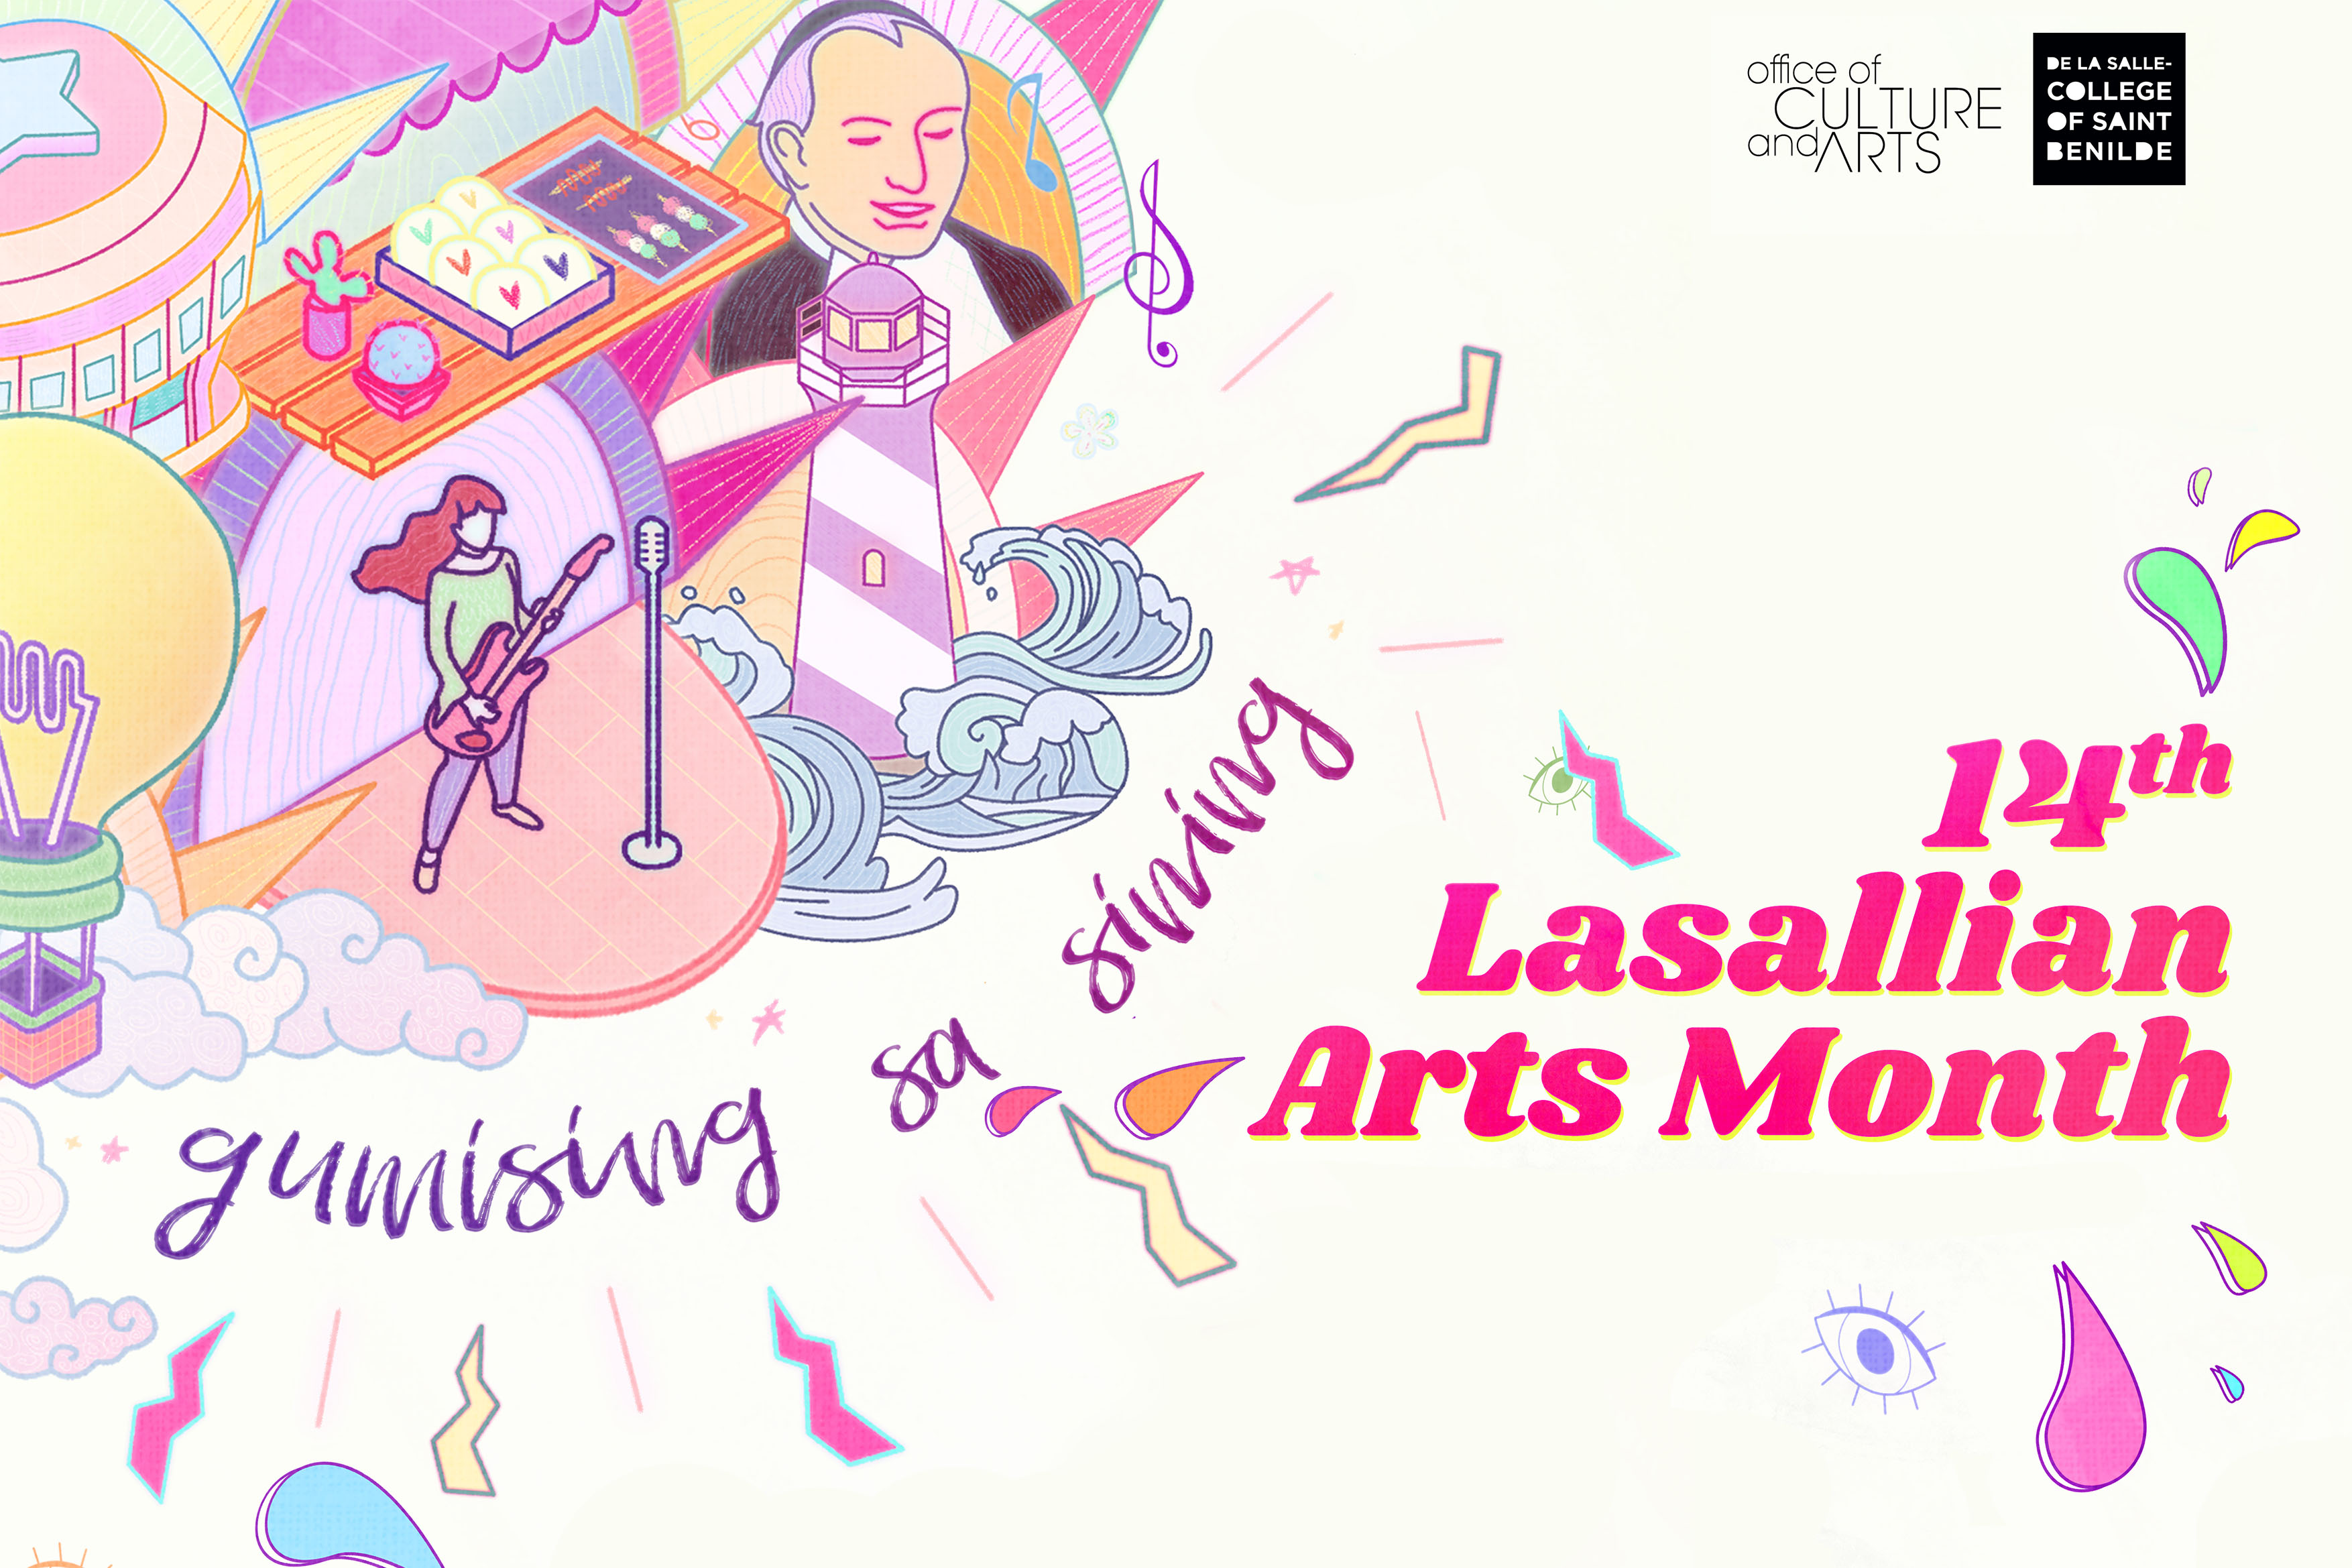 Gumising Sa Sining 14th Lasallian Arts Month